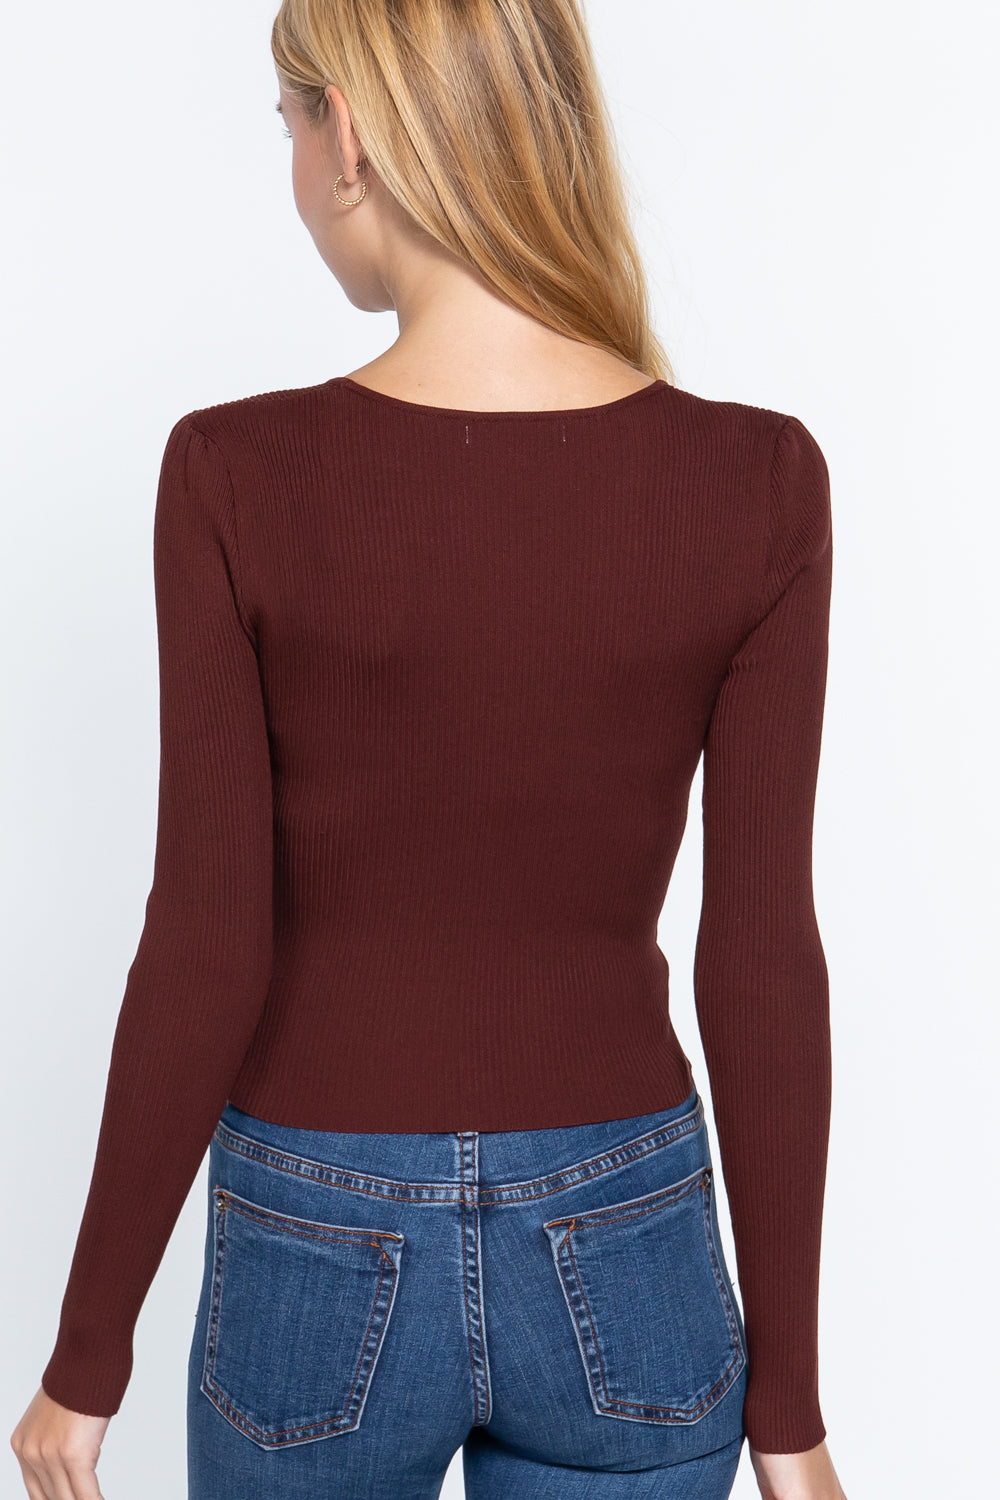 Burgundy Shirring Sweetheart Neck Long Sleeve Elegant Slim Fit Sweater Top_ Shirts & Tops jehouze 